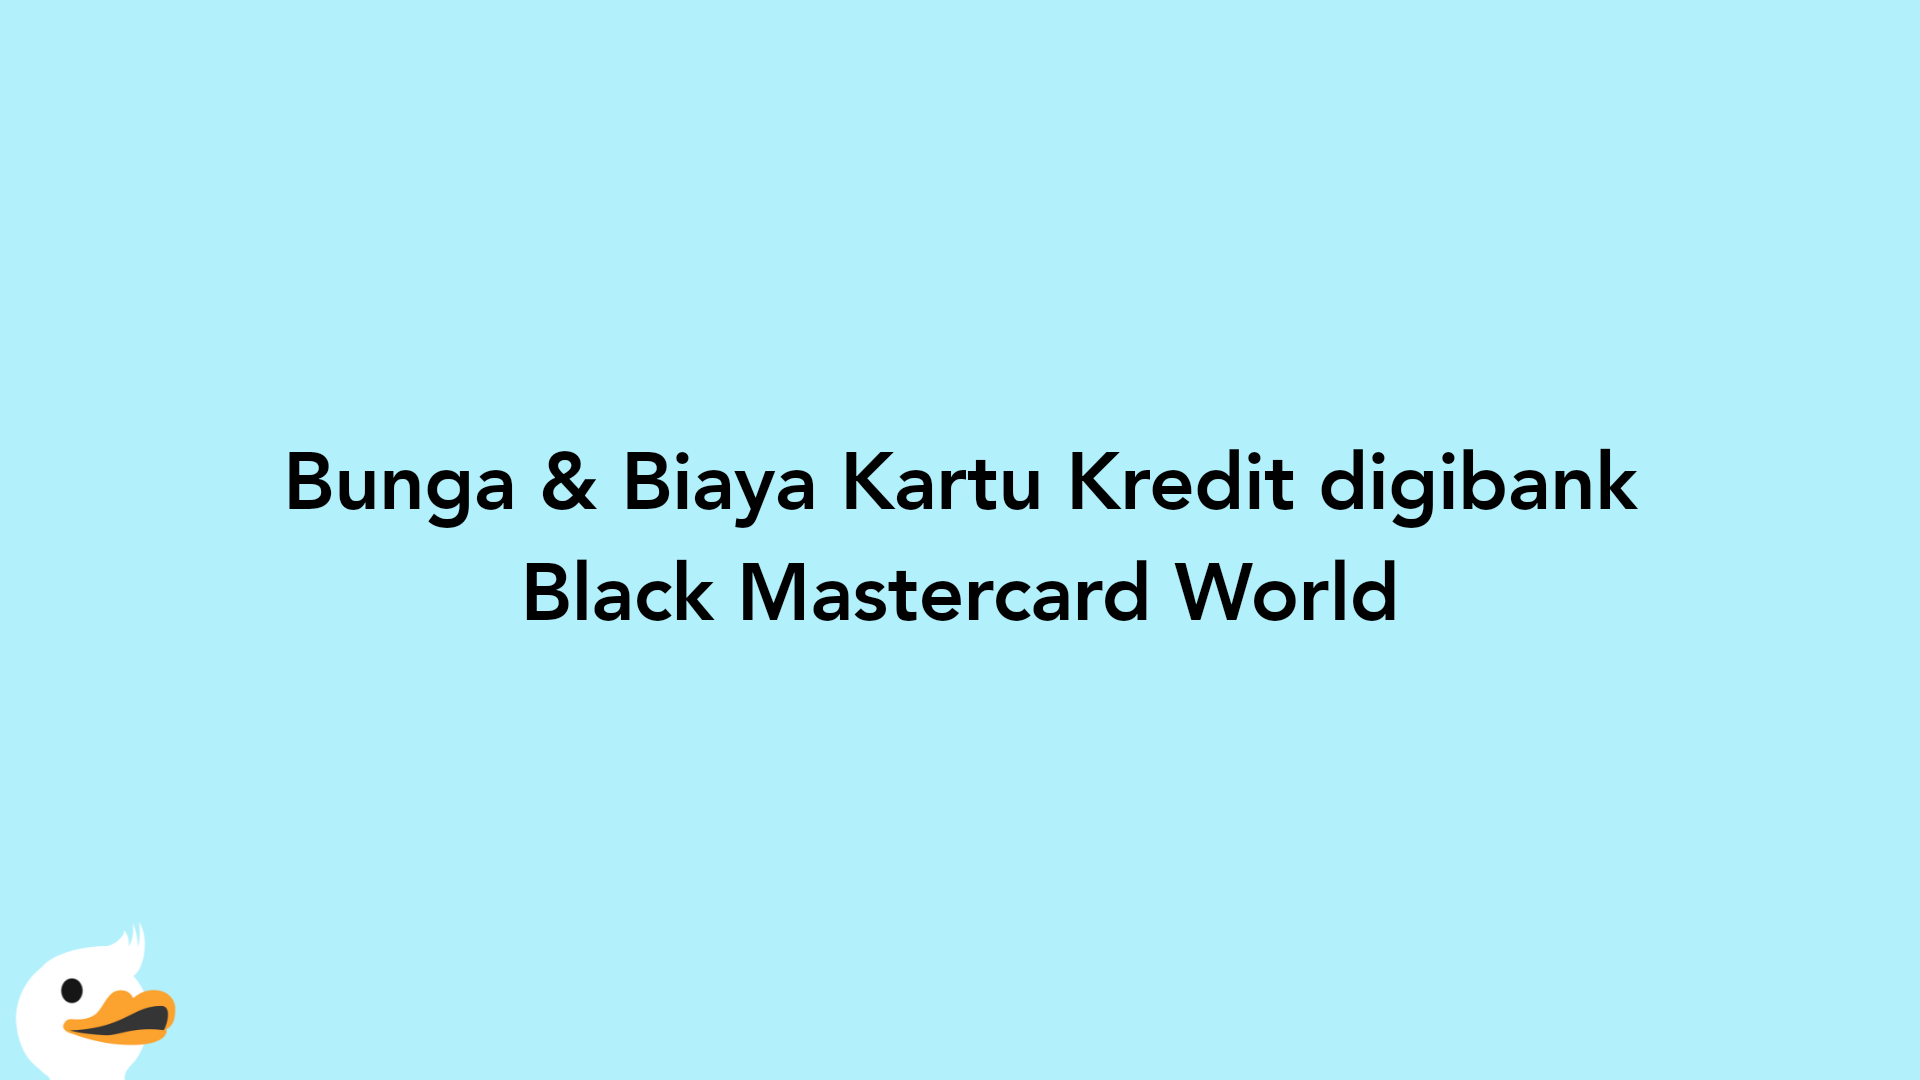 Bunga & Biaya Kartu Kredit digibank Black Mastercard World